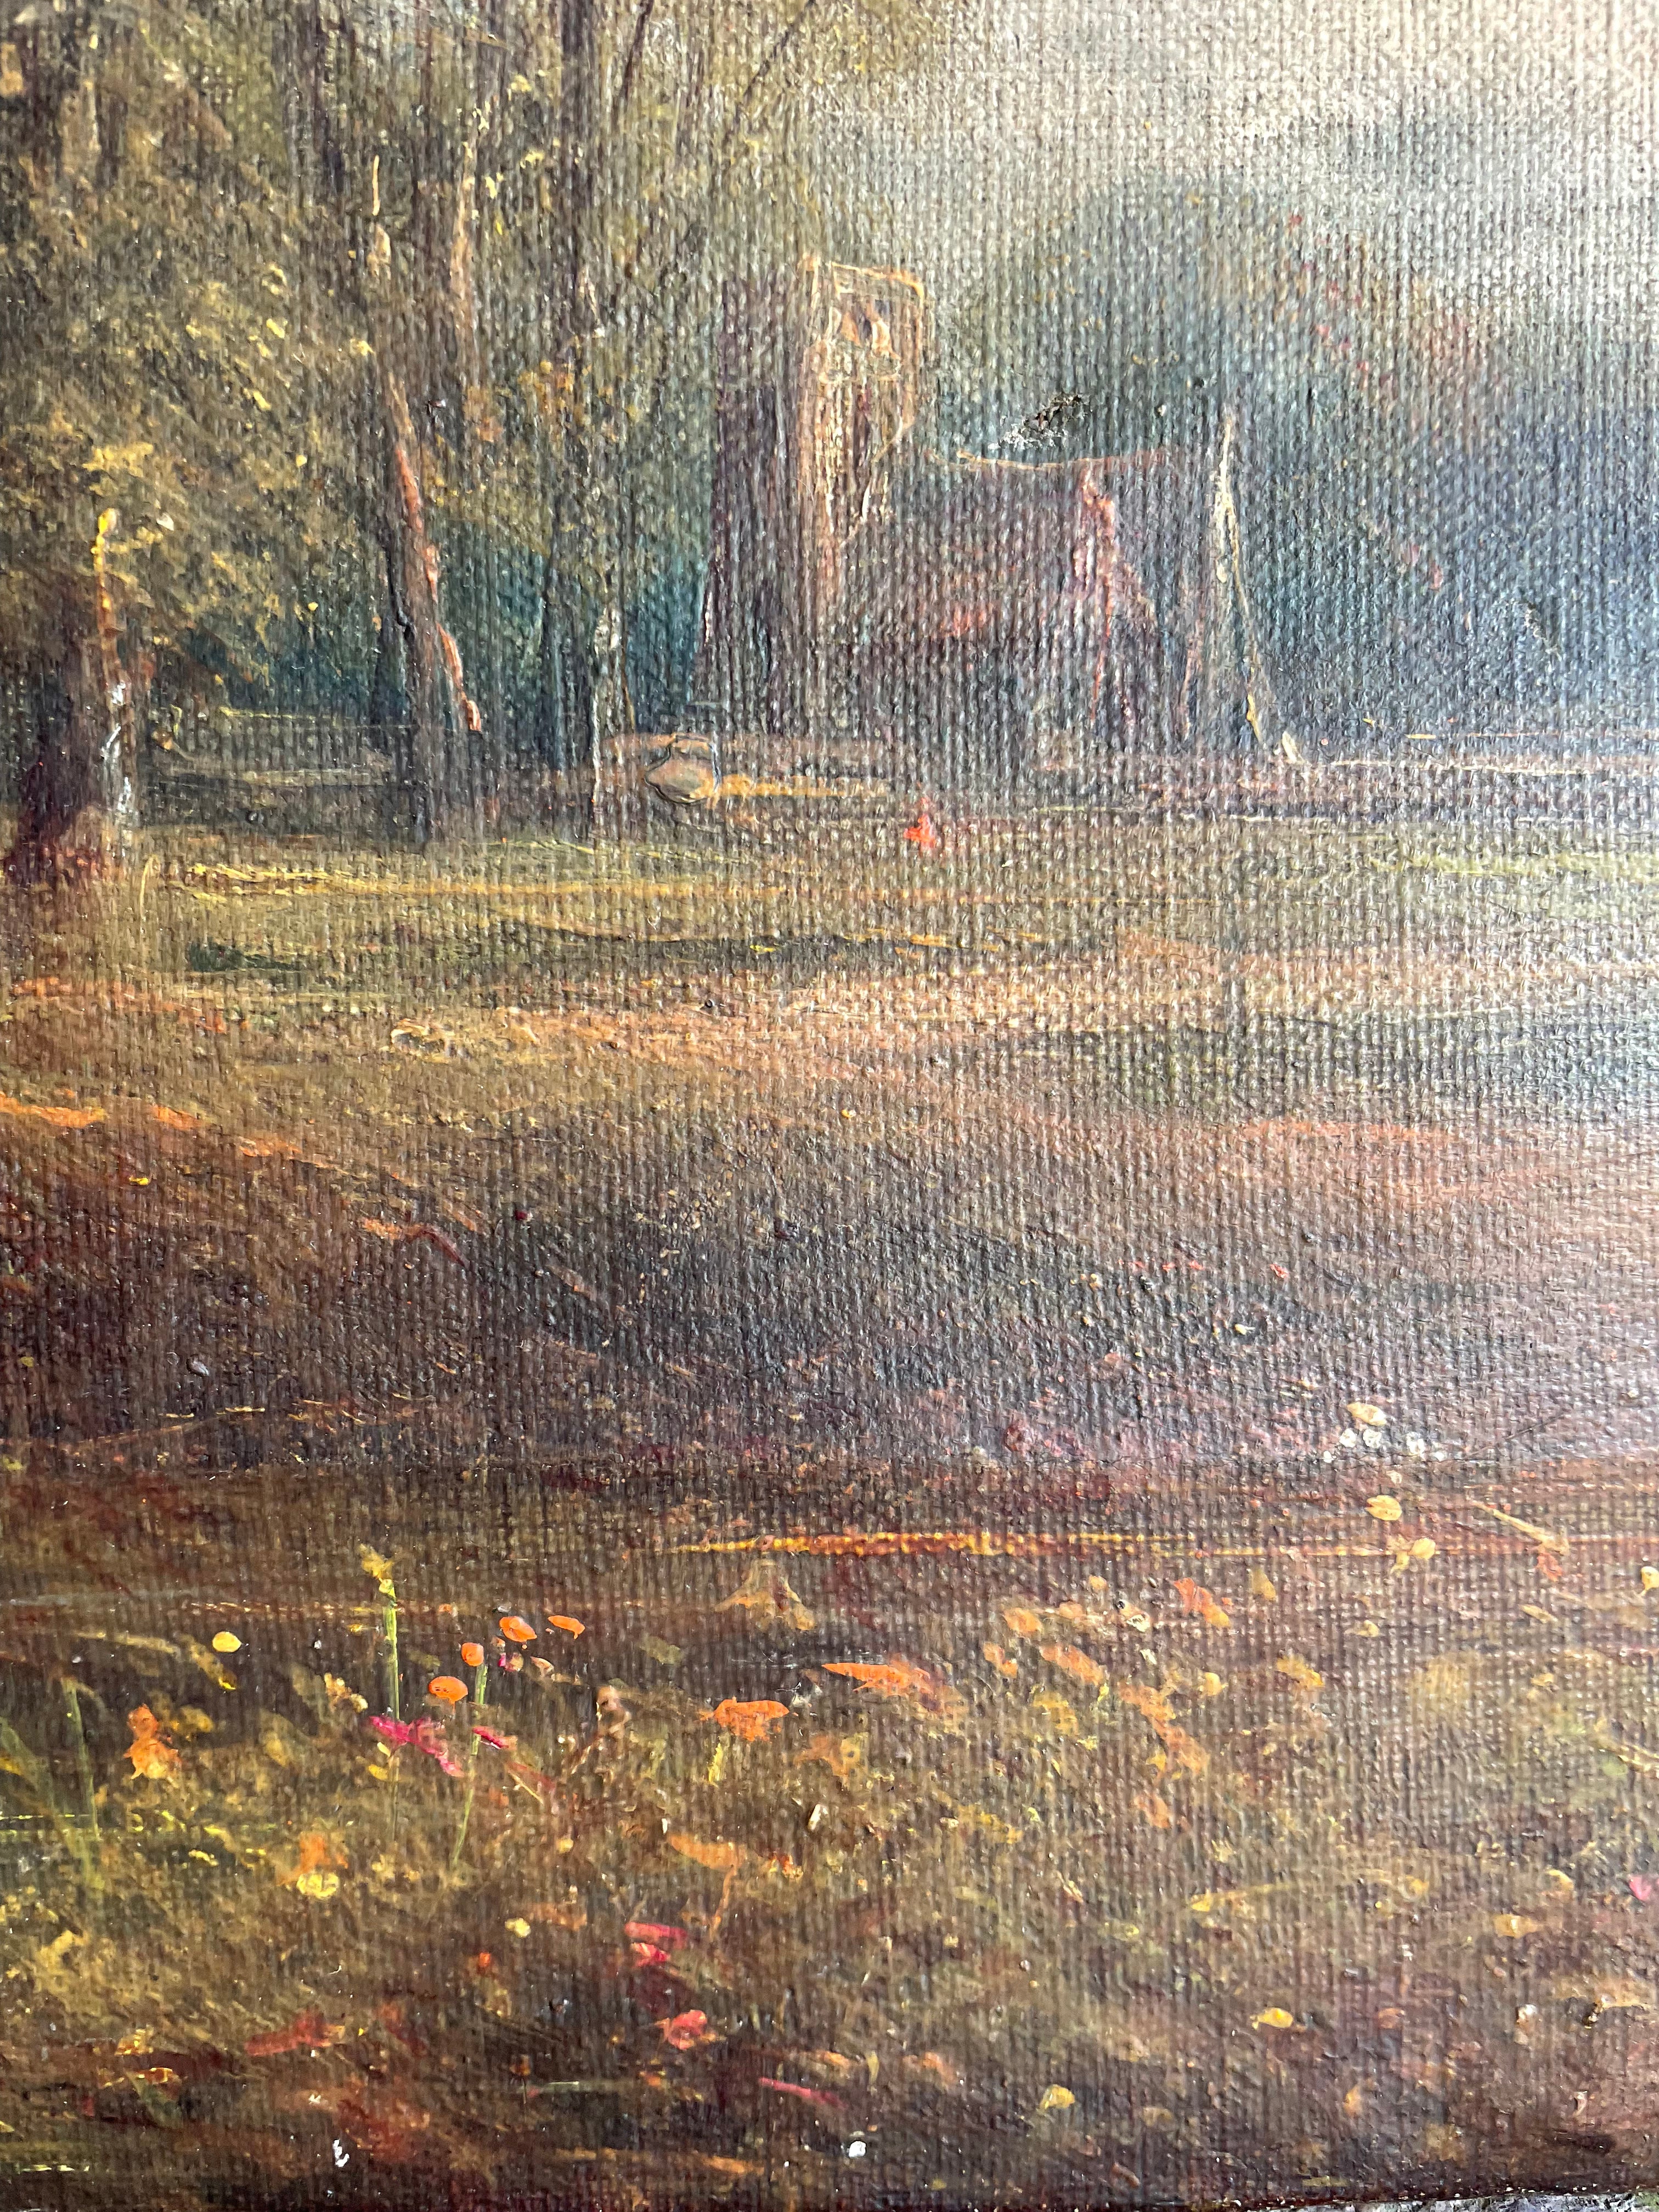 Antique Landscape: Unframed Oil on canvas